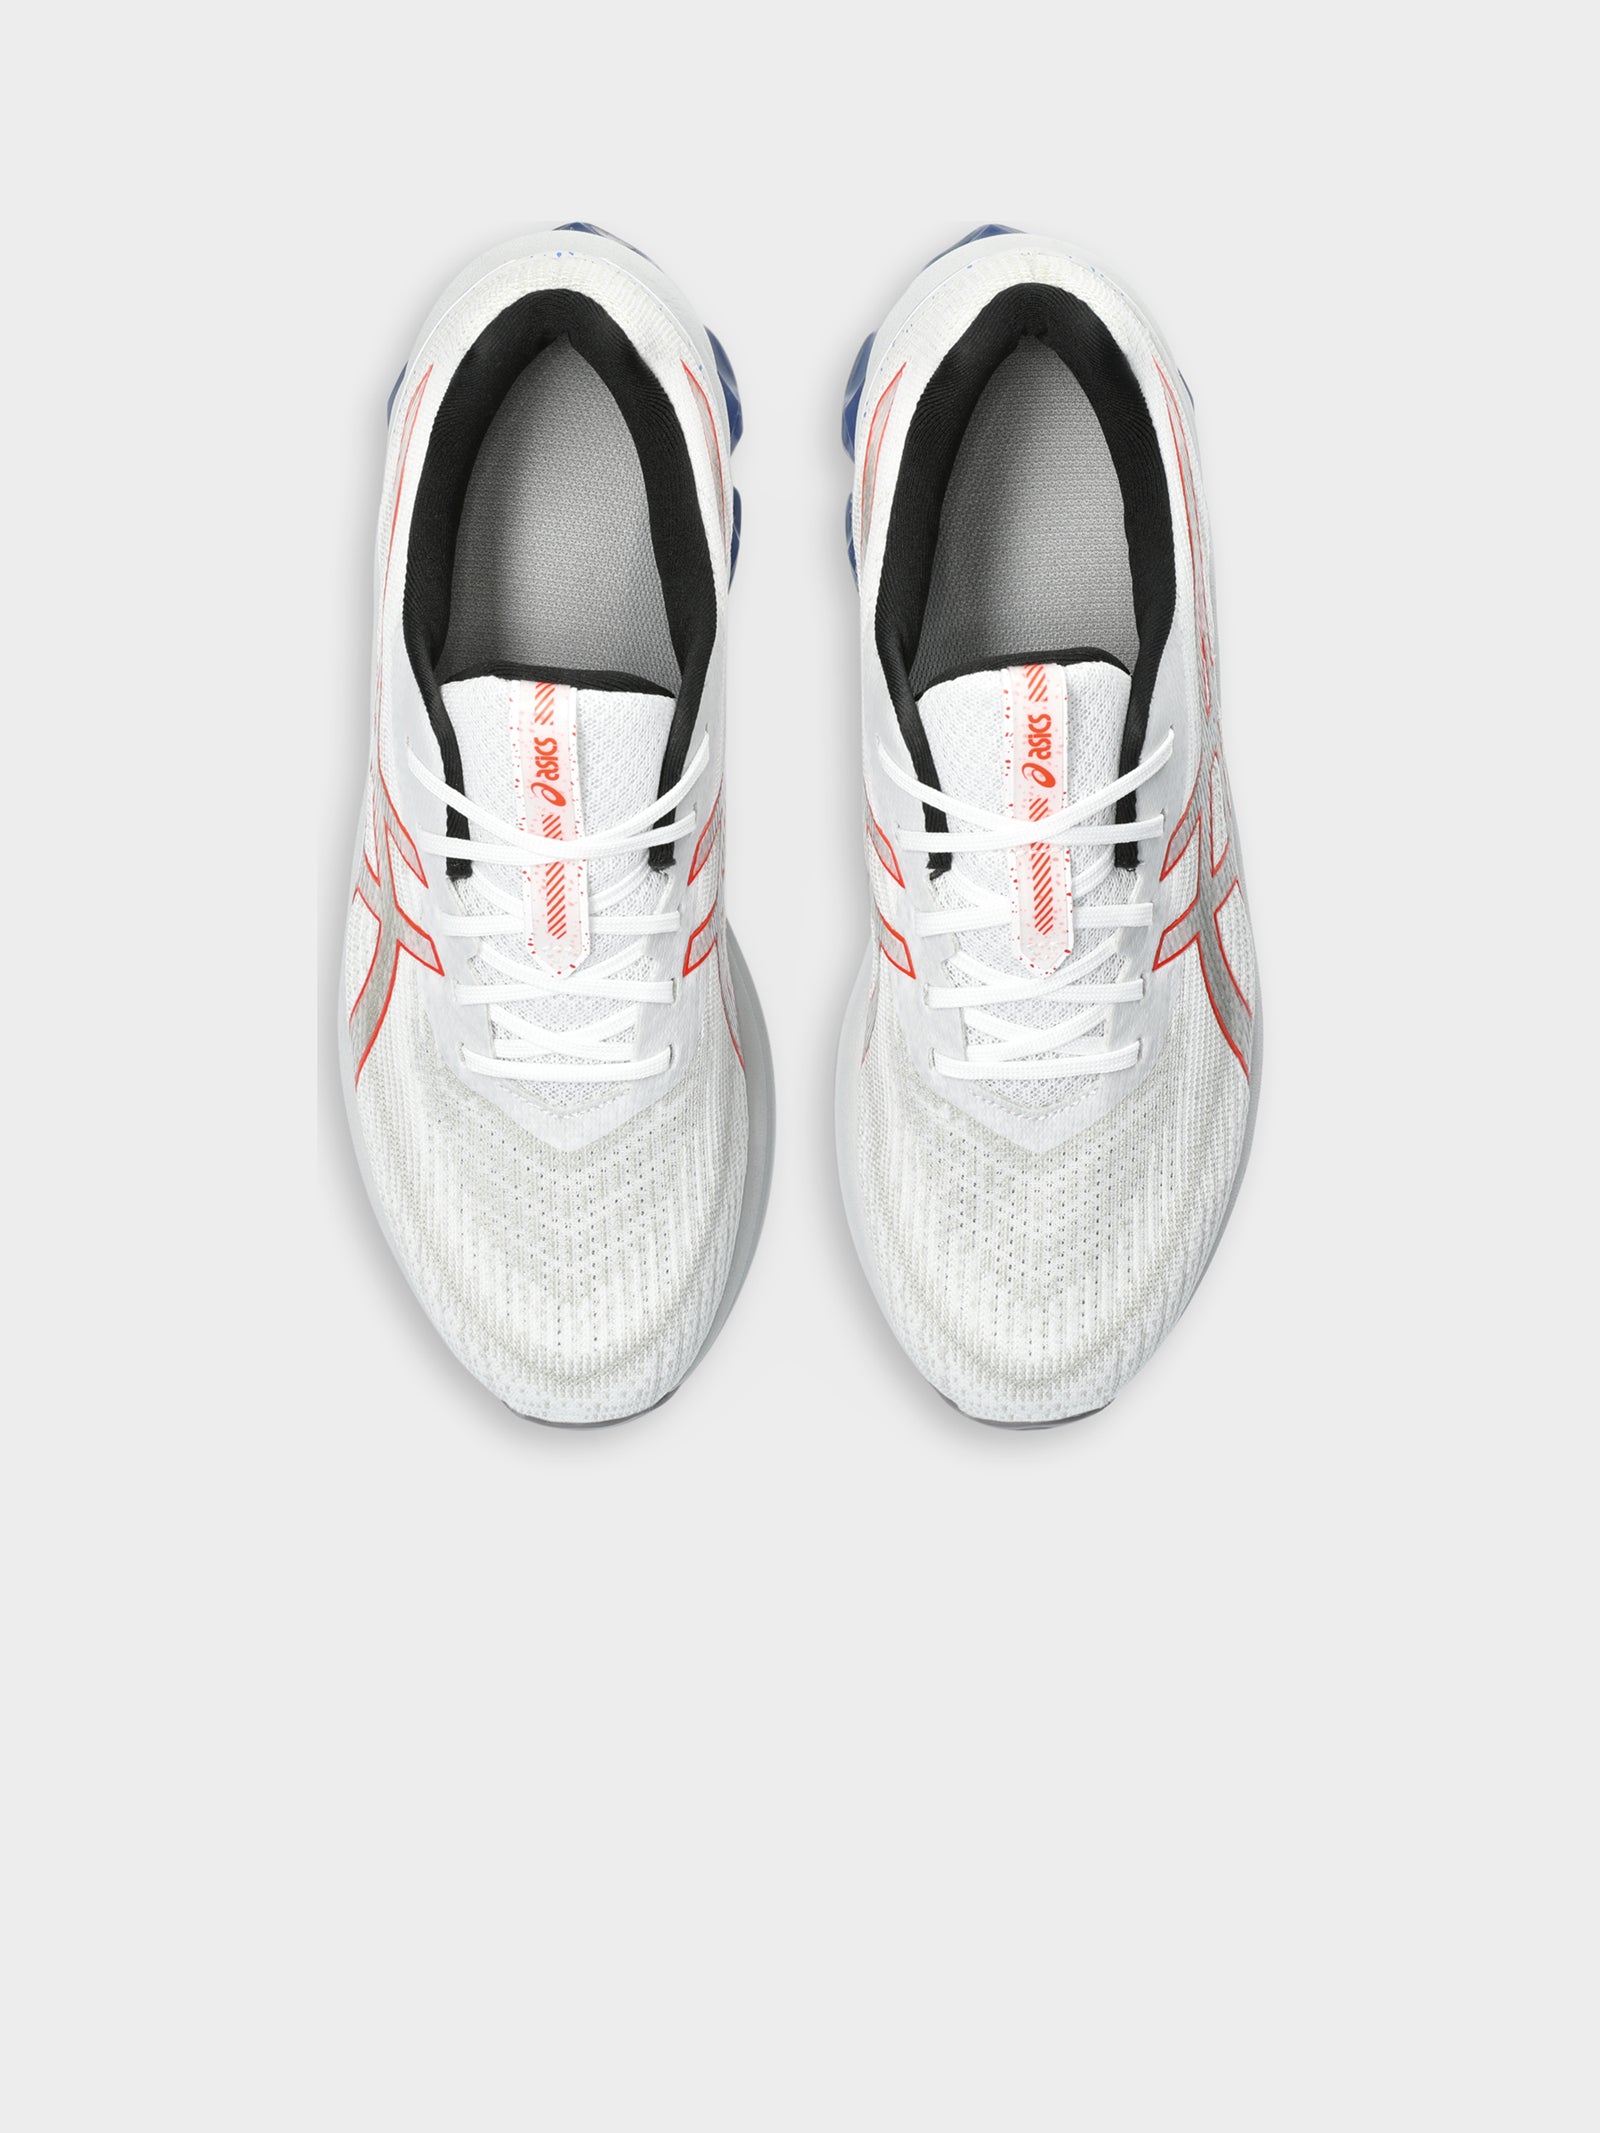 Unisex Gel-Quantum 180 Sneakers in White, Blue & Red